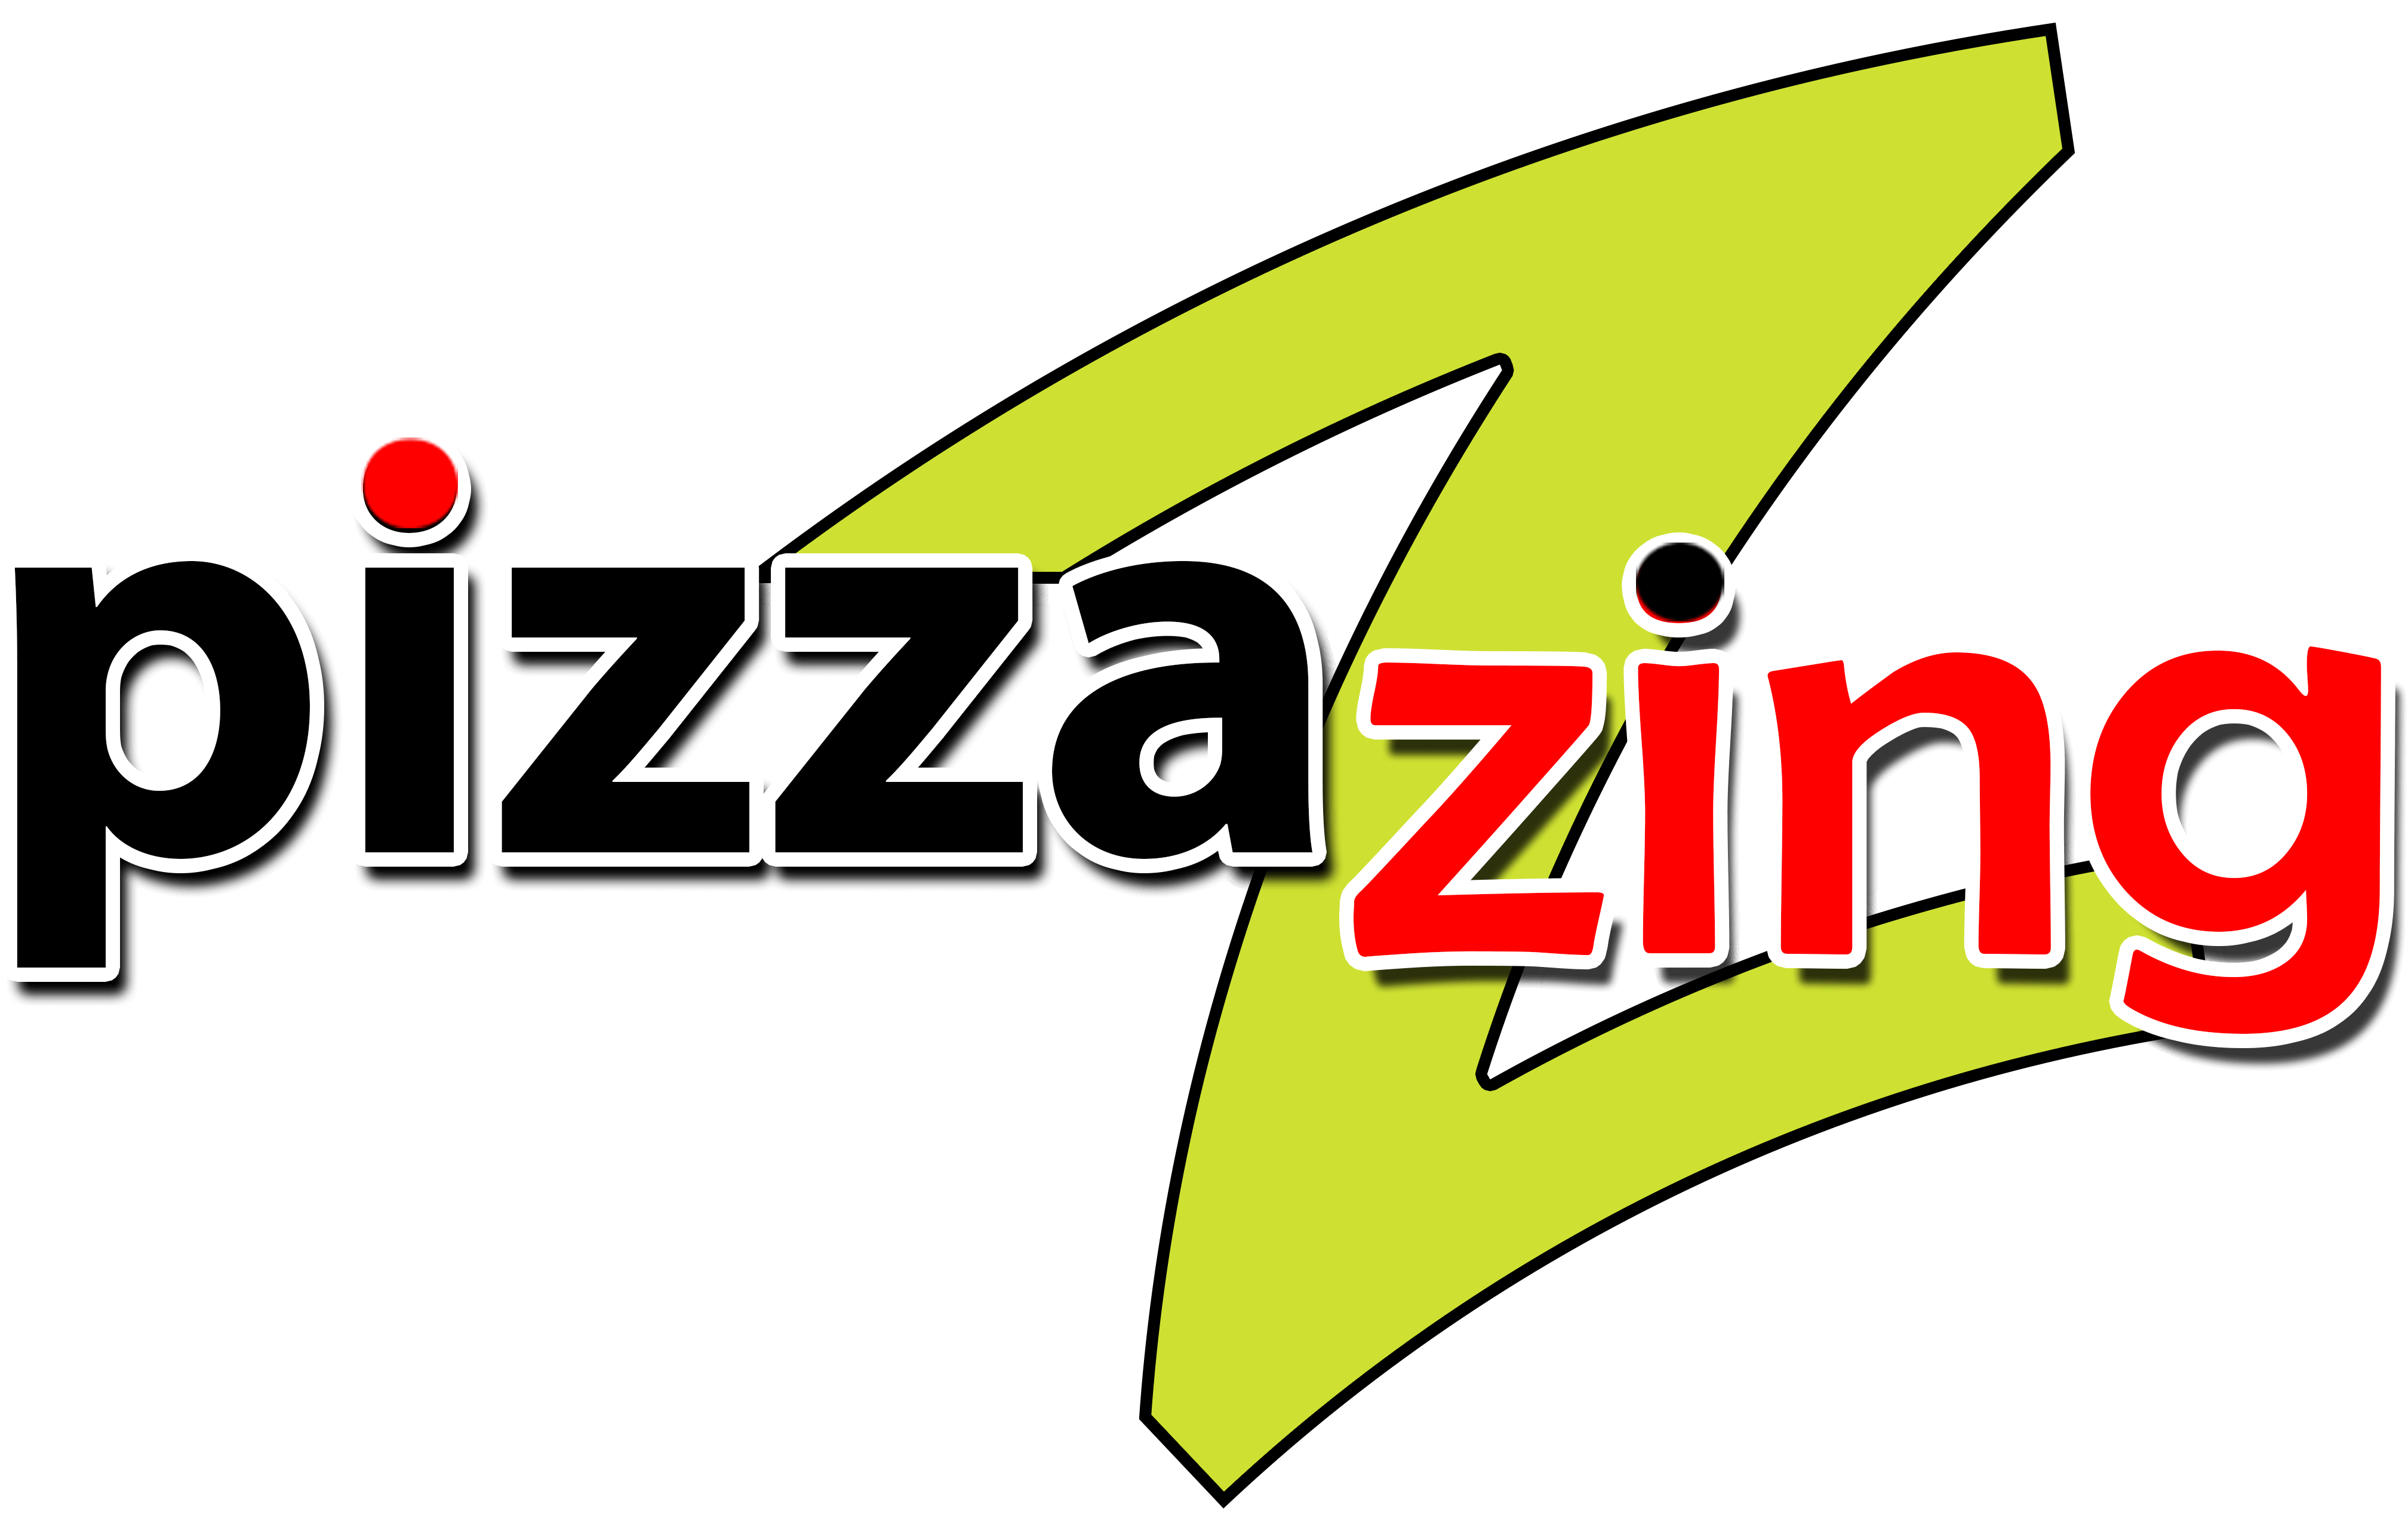 Pizza Zing Pizza, Pasta, Beer, and Wings in Phoenix Arizona